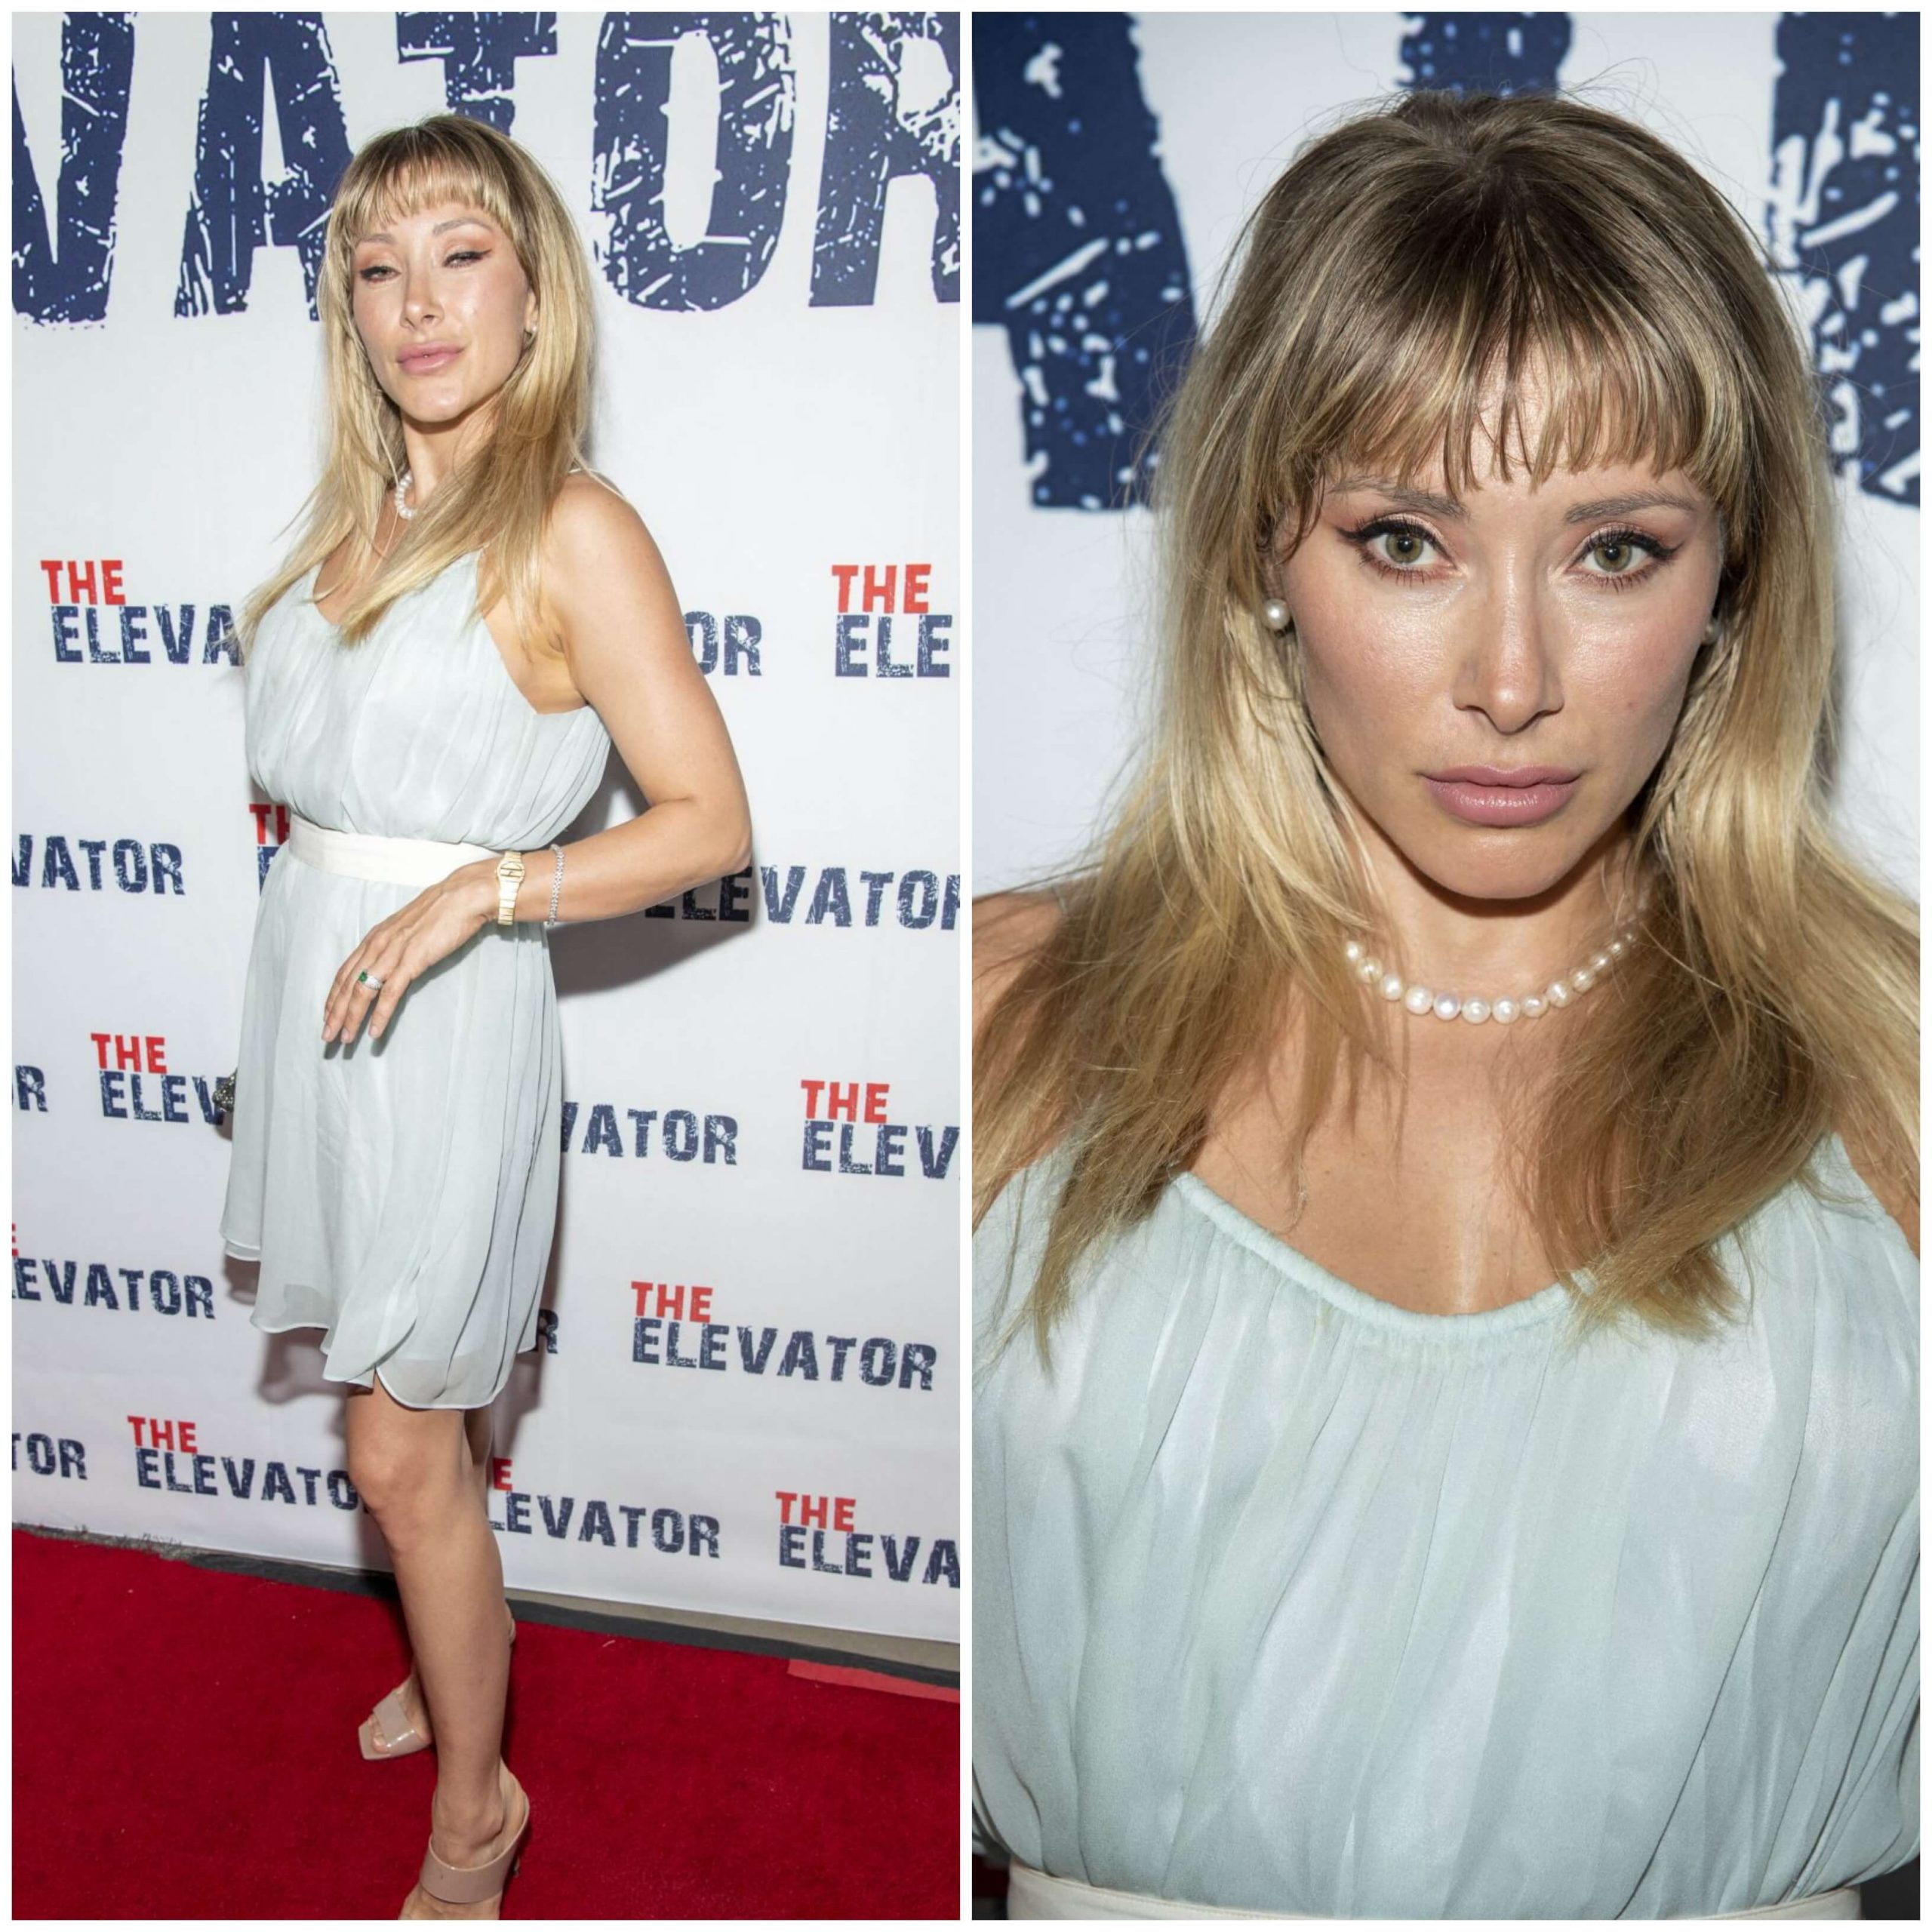 Alexandra Vino – “Elevator” Premiere in Hollywood